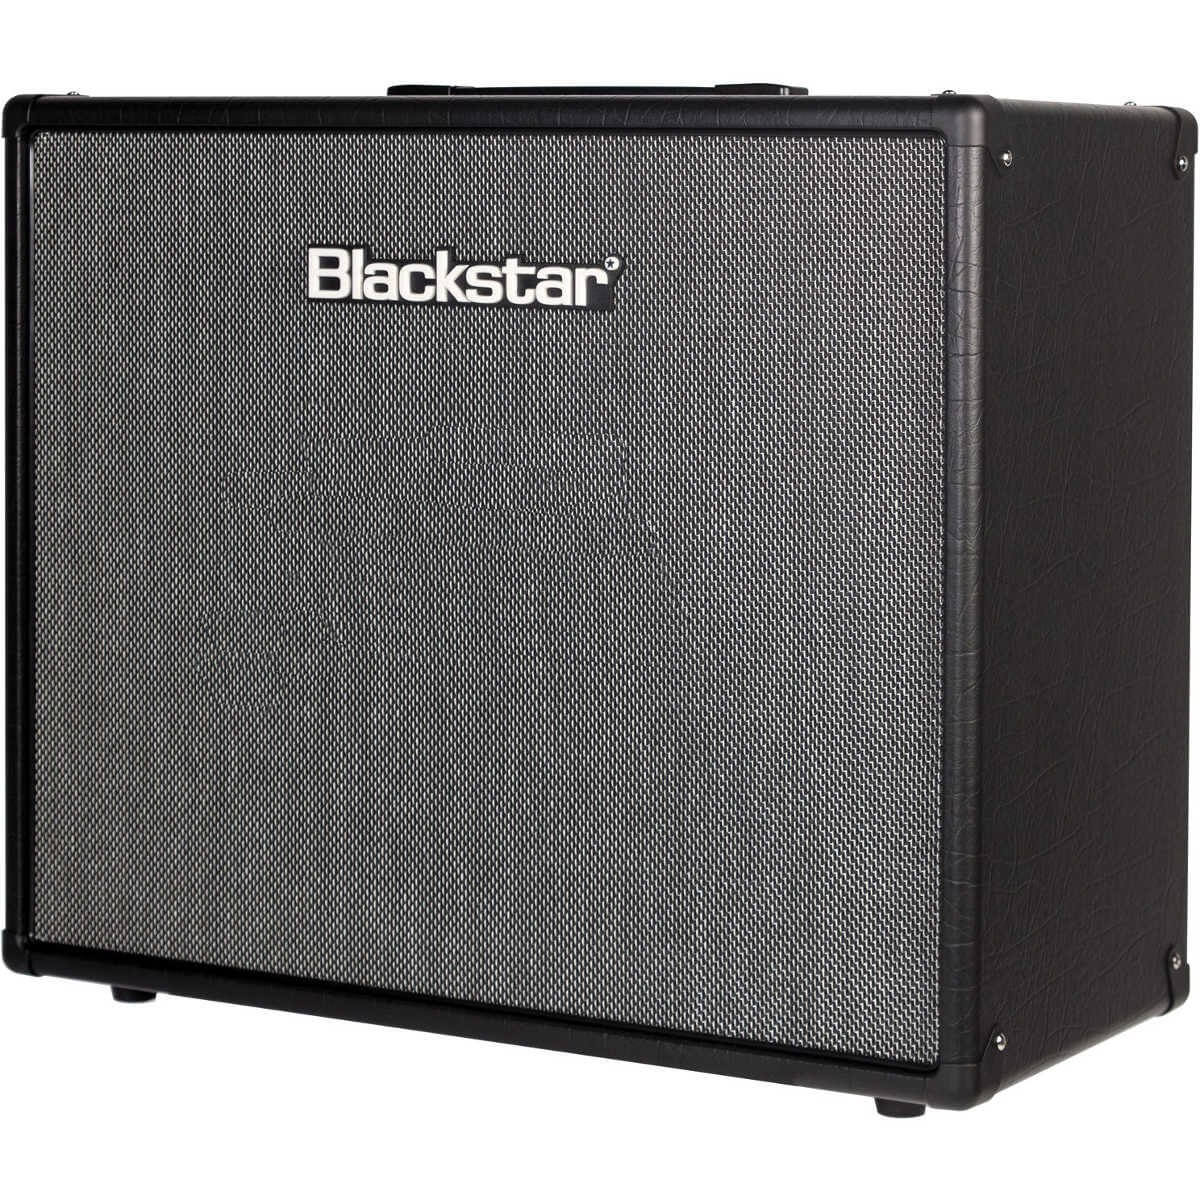 Blackstar Htv 112 Mkii Venue Electric Guitar Amp Cabinet